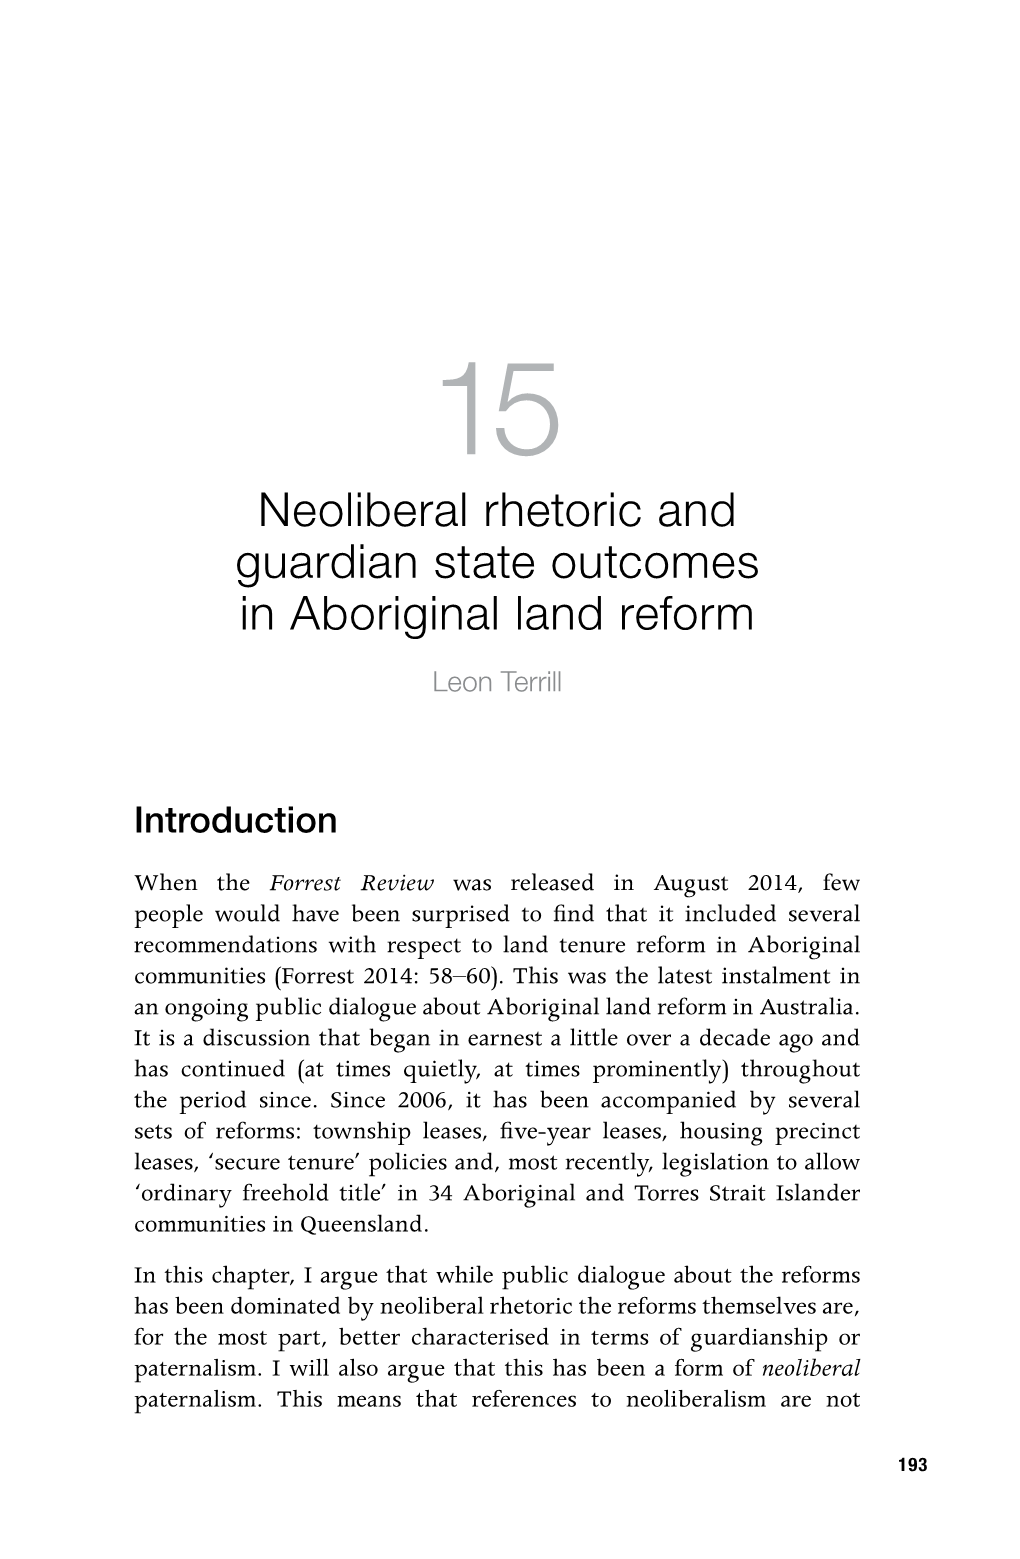 Neoliberal Rhetoric and Guardian State Outcomes in Aboriginal Land Reform Leon Terrill